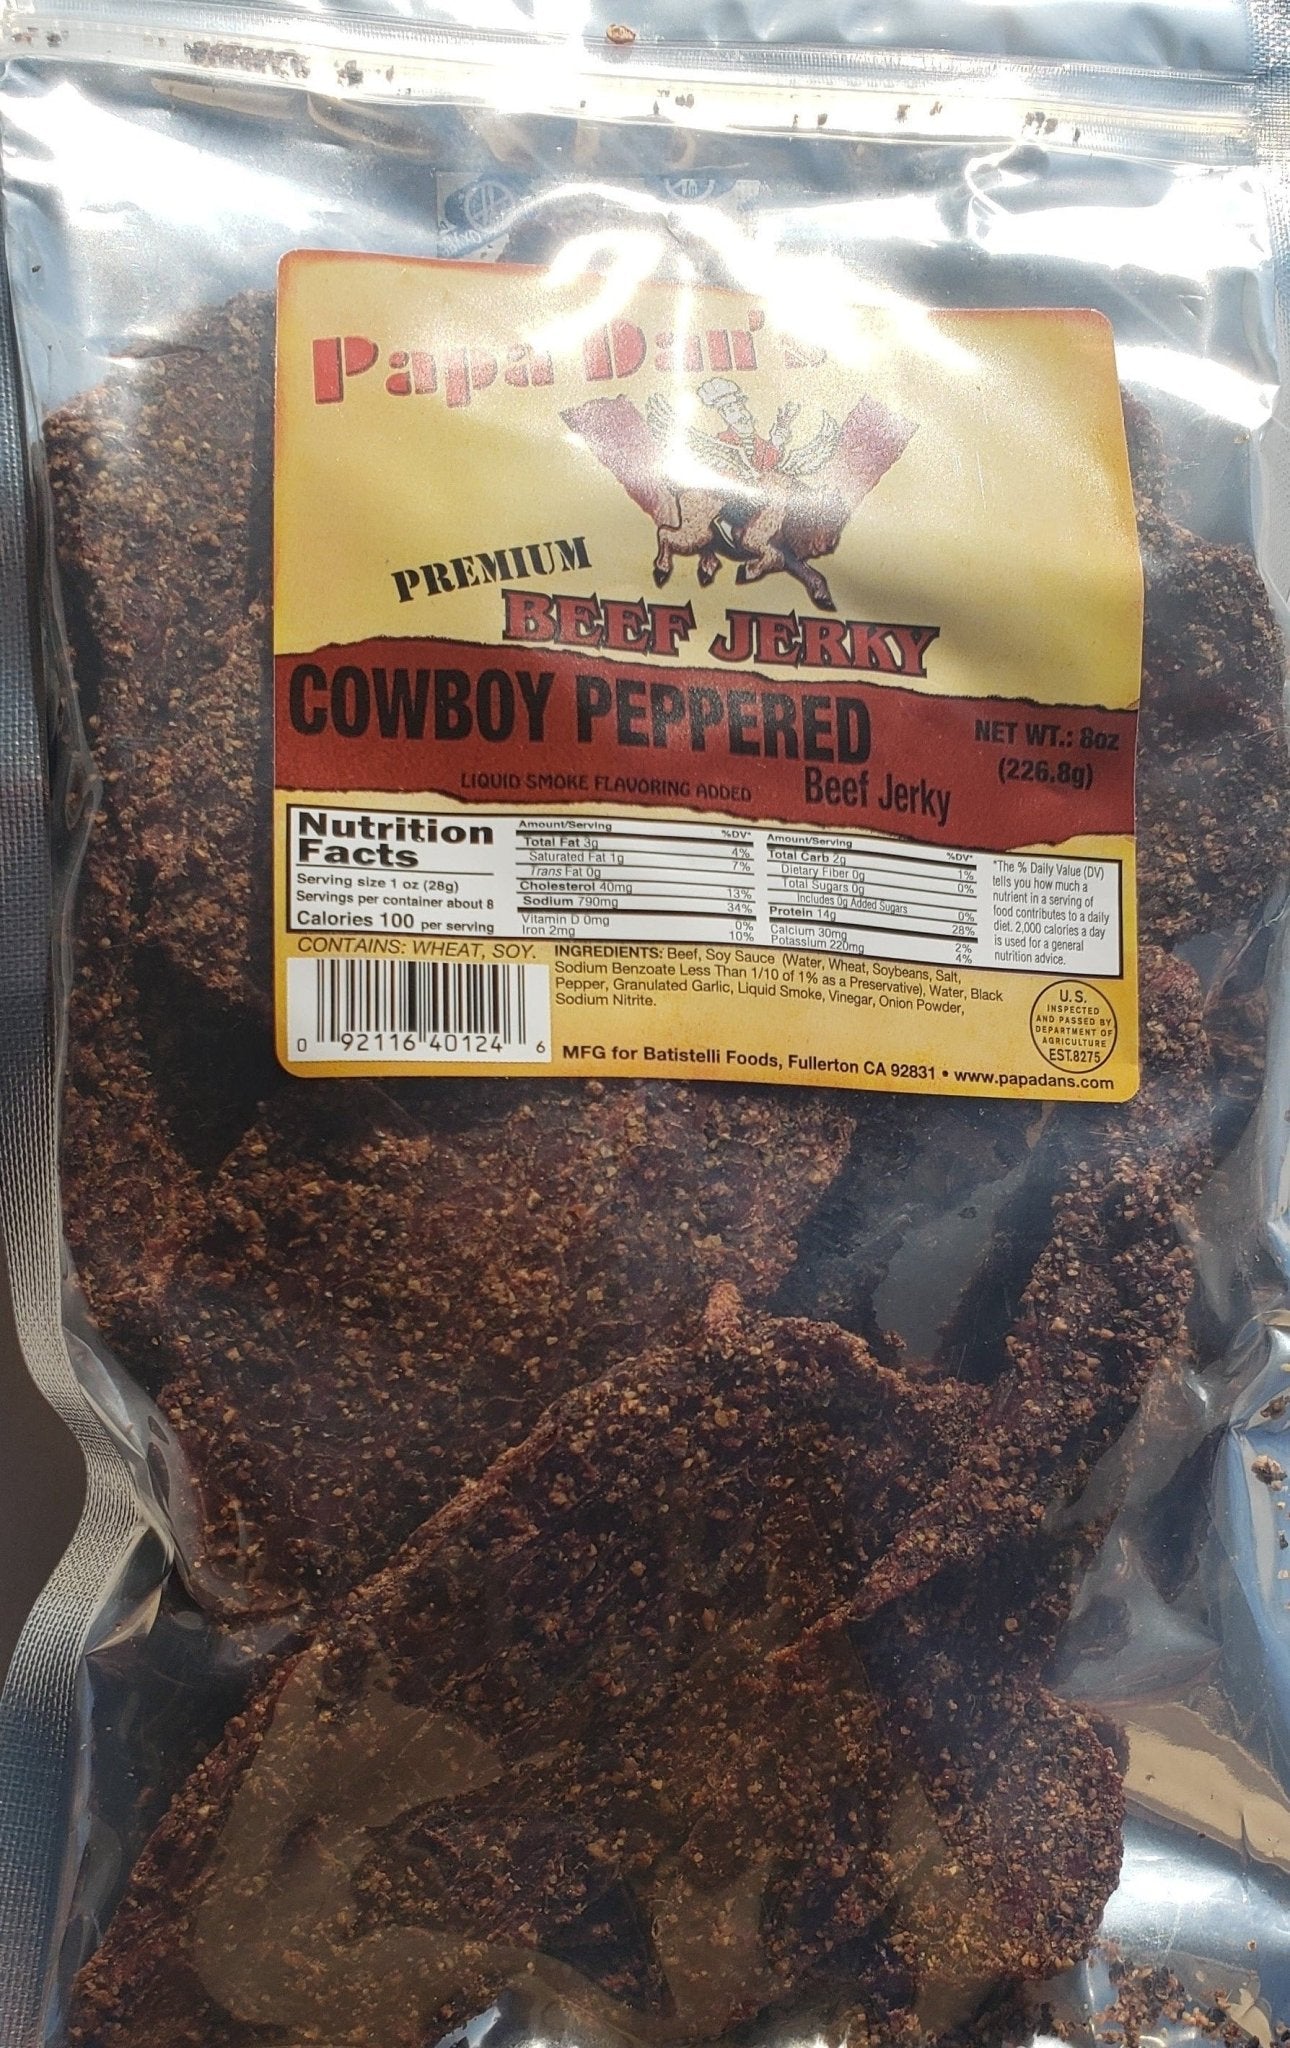 Papa Dan's Cowboy Peppered (Thin-cut) No Sugar -- 8oz - The Jerky Hut online